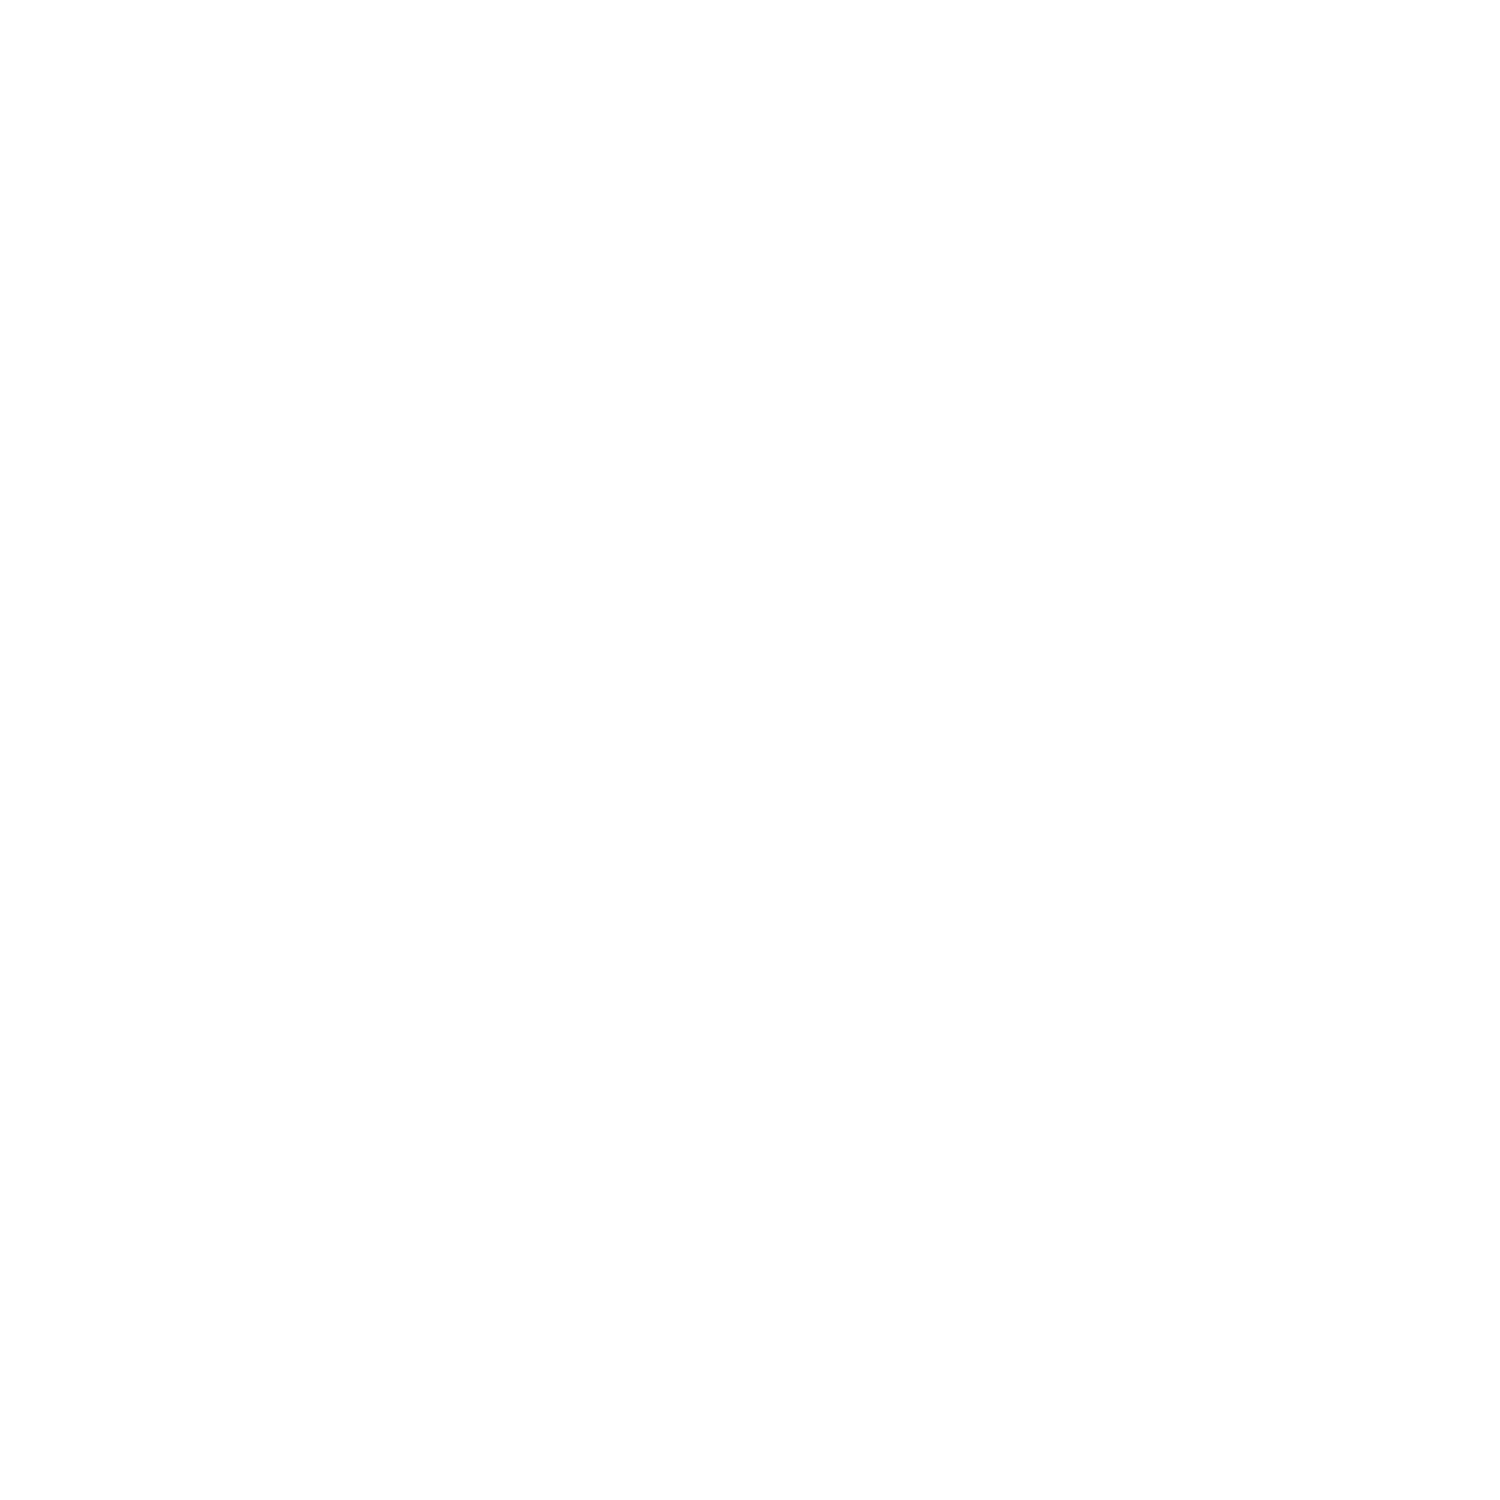 Tampa Bay Friendship Trail